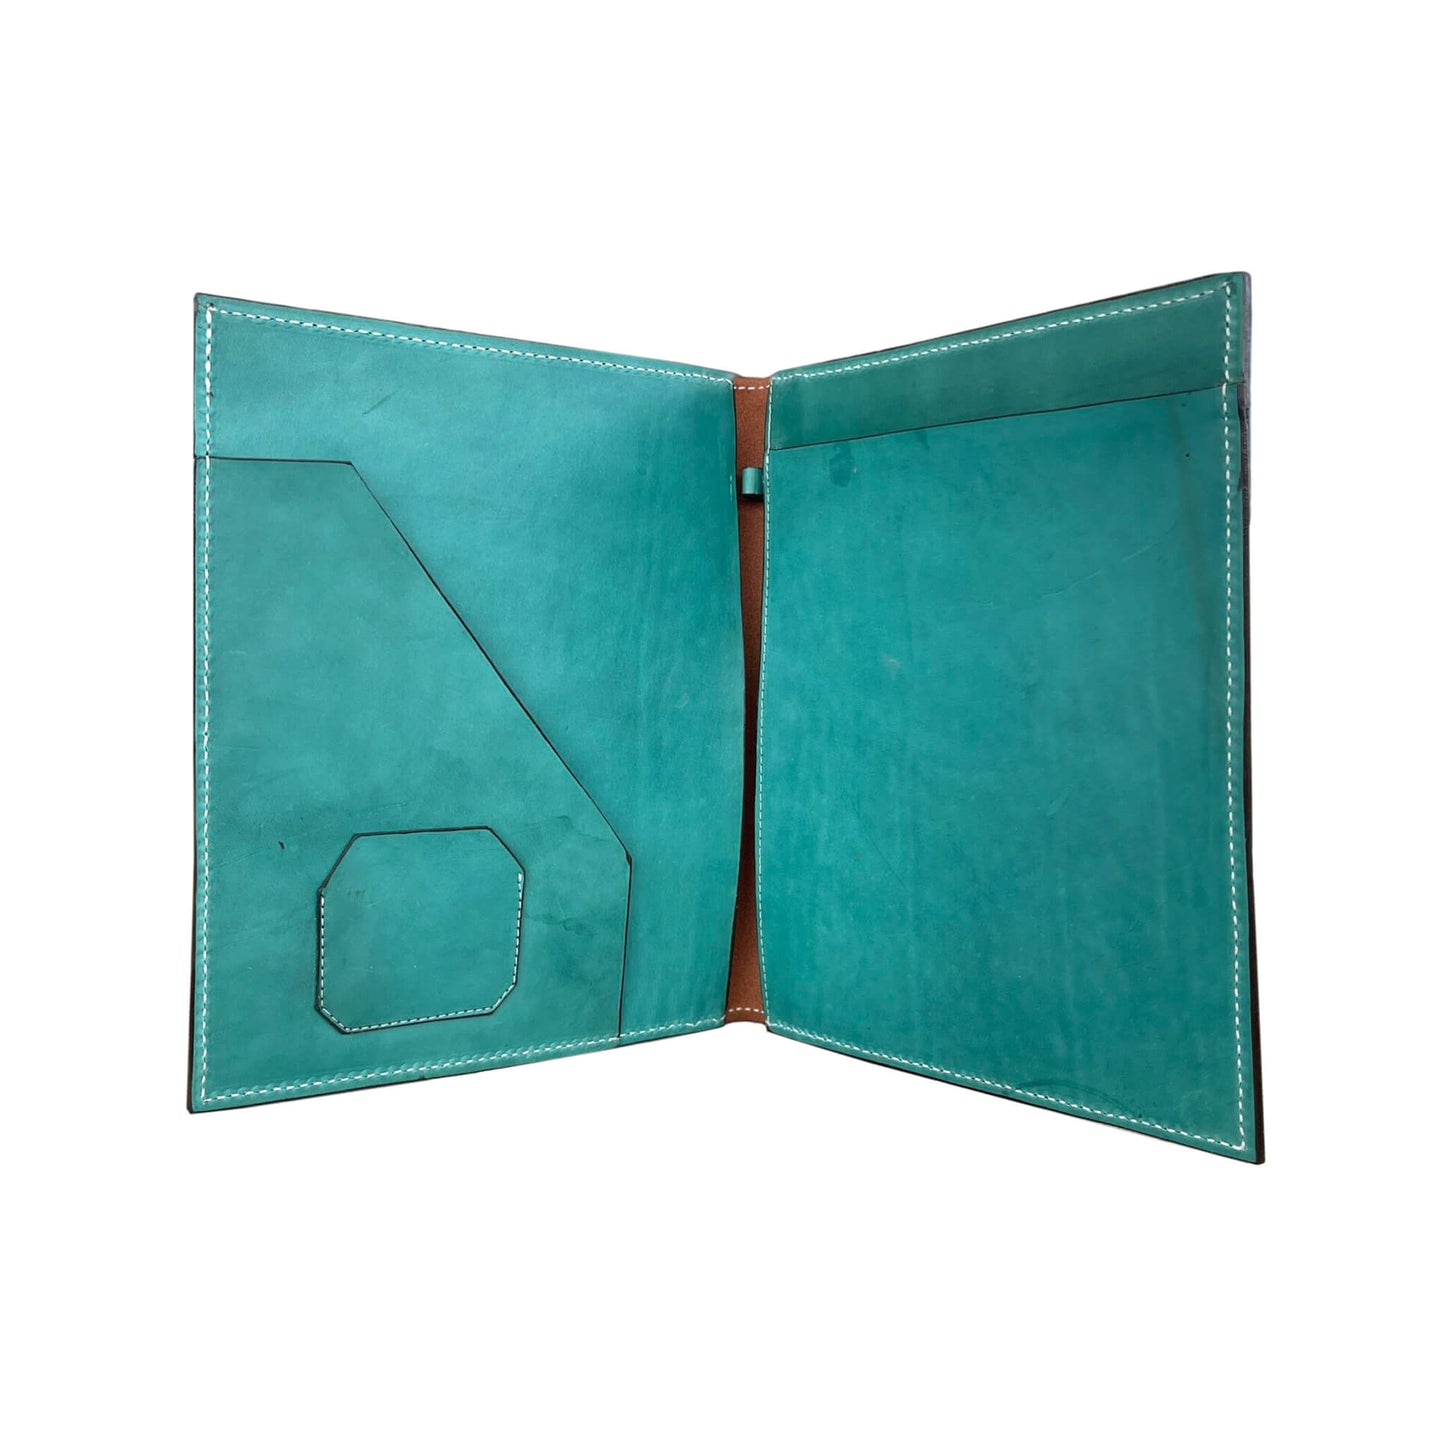 Large portfolio turquoise leather AA tooling with background paint